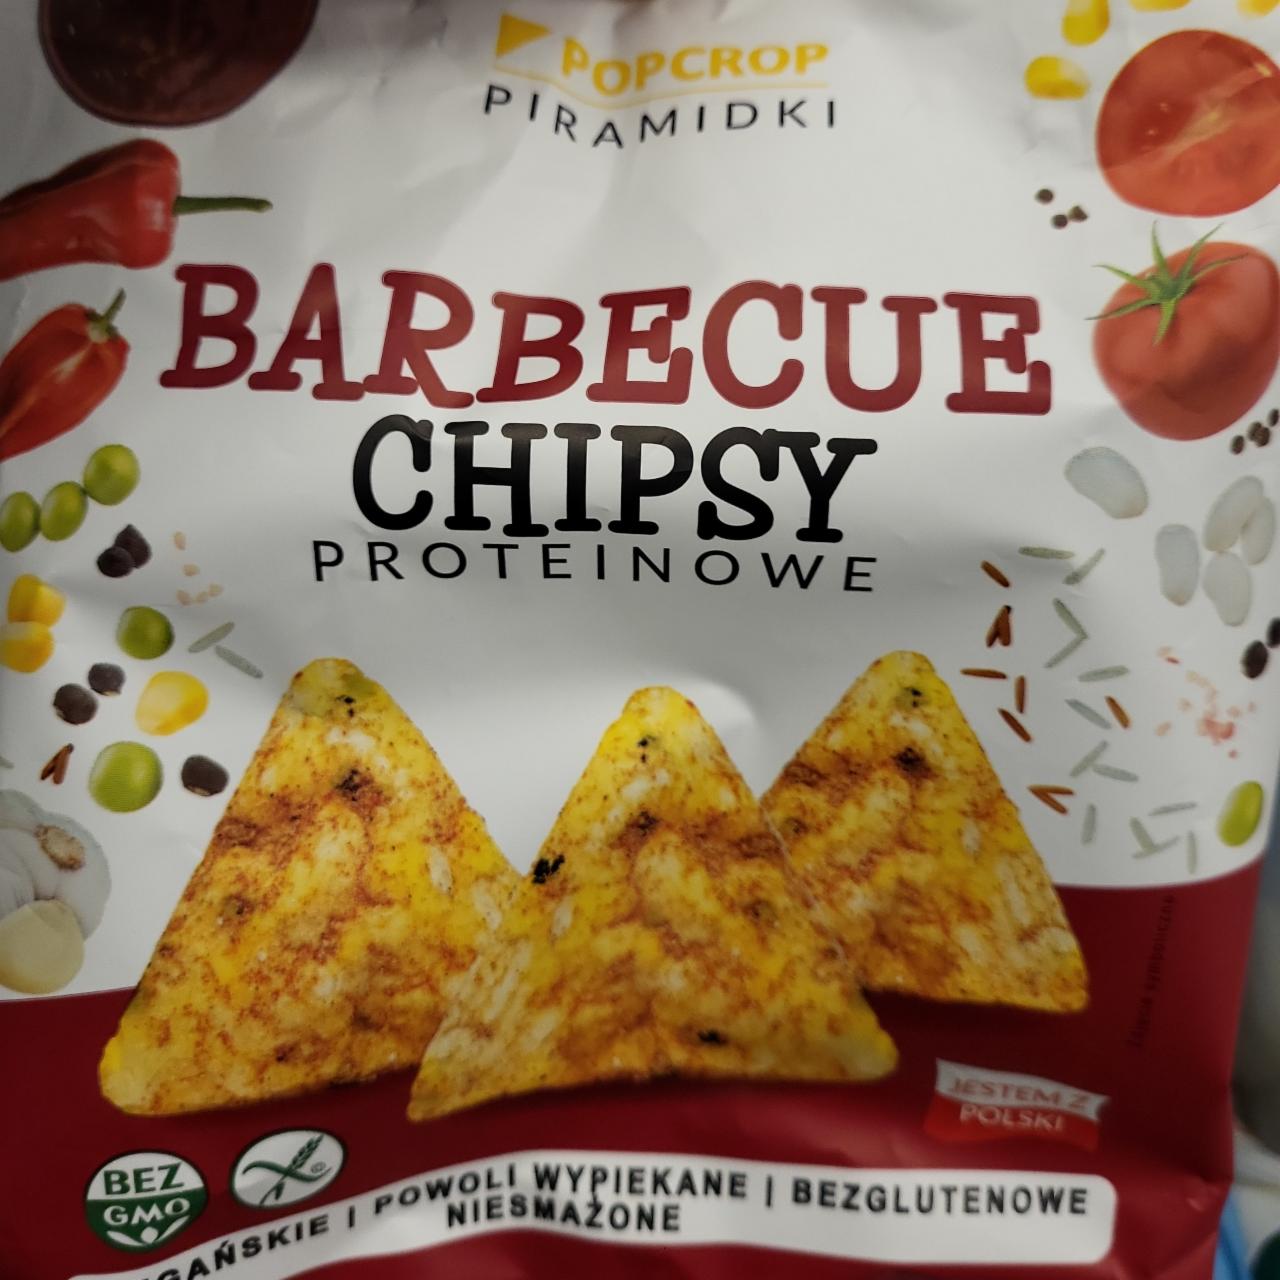 Фото - Barbecue Chipsy Proteinowe Popcrop